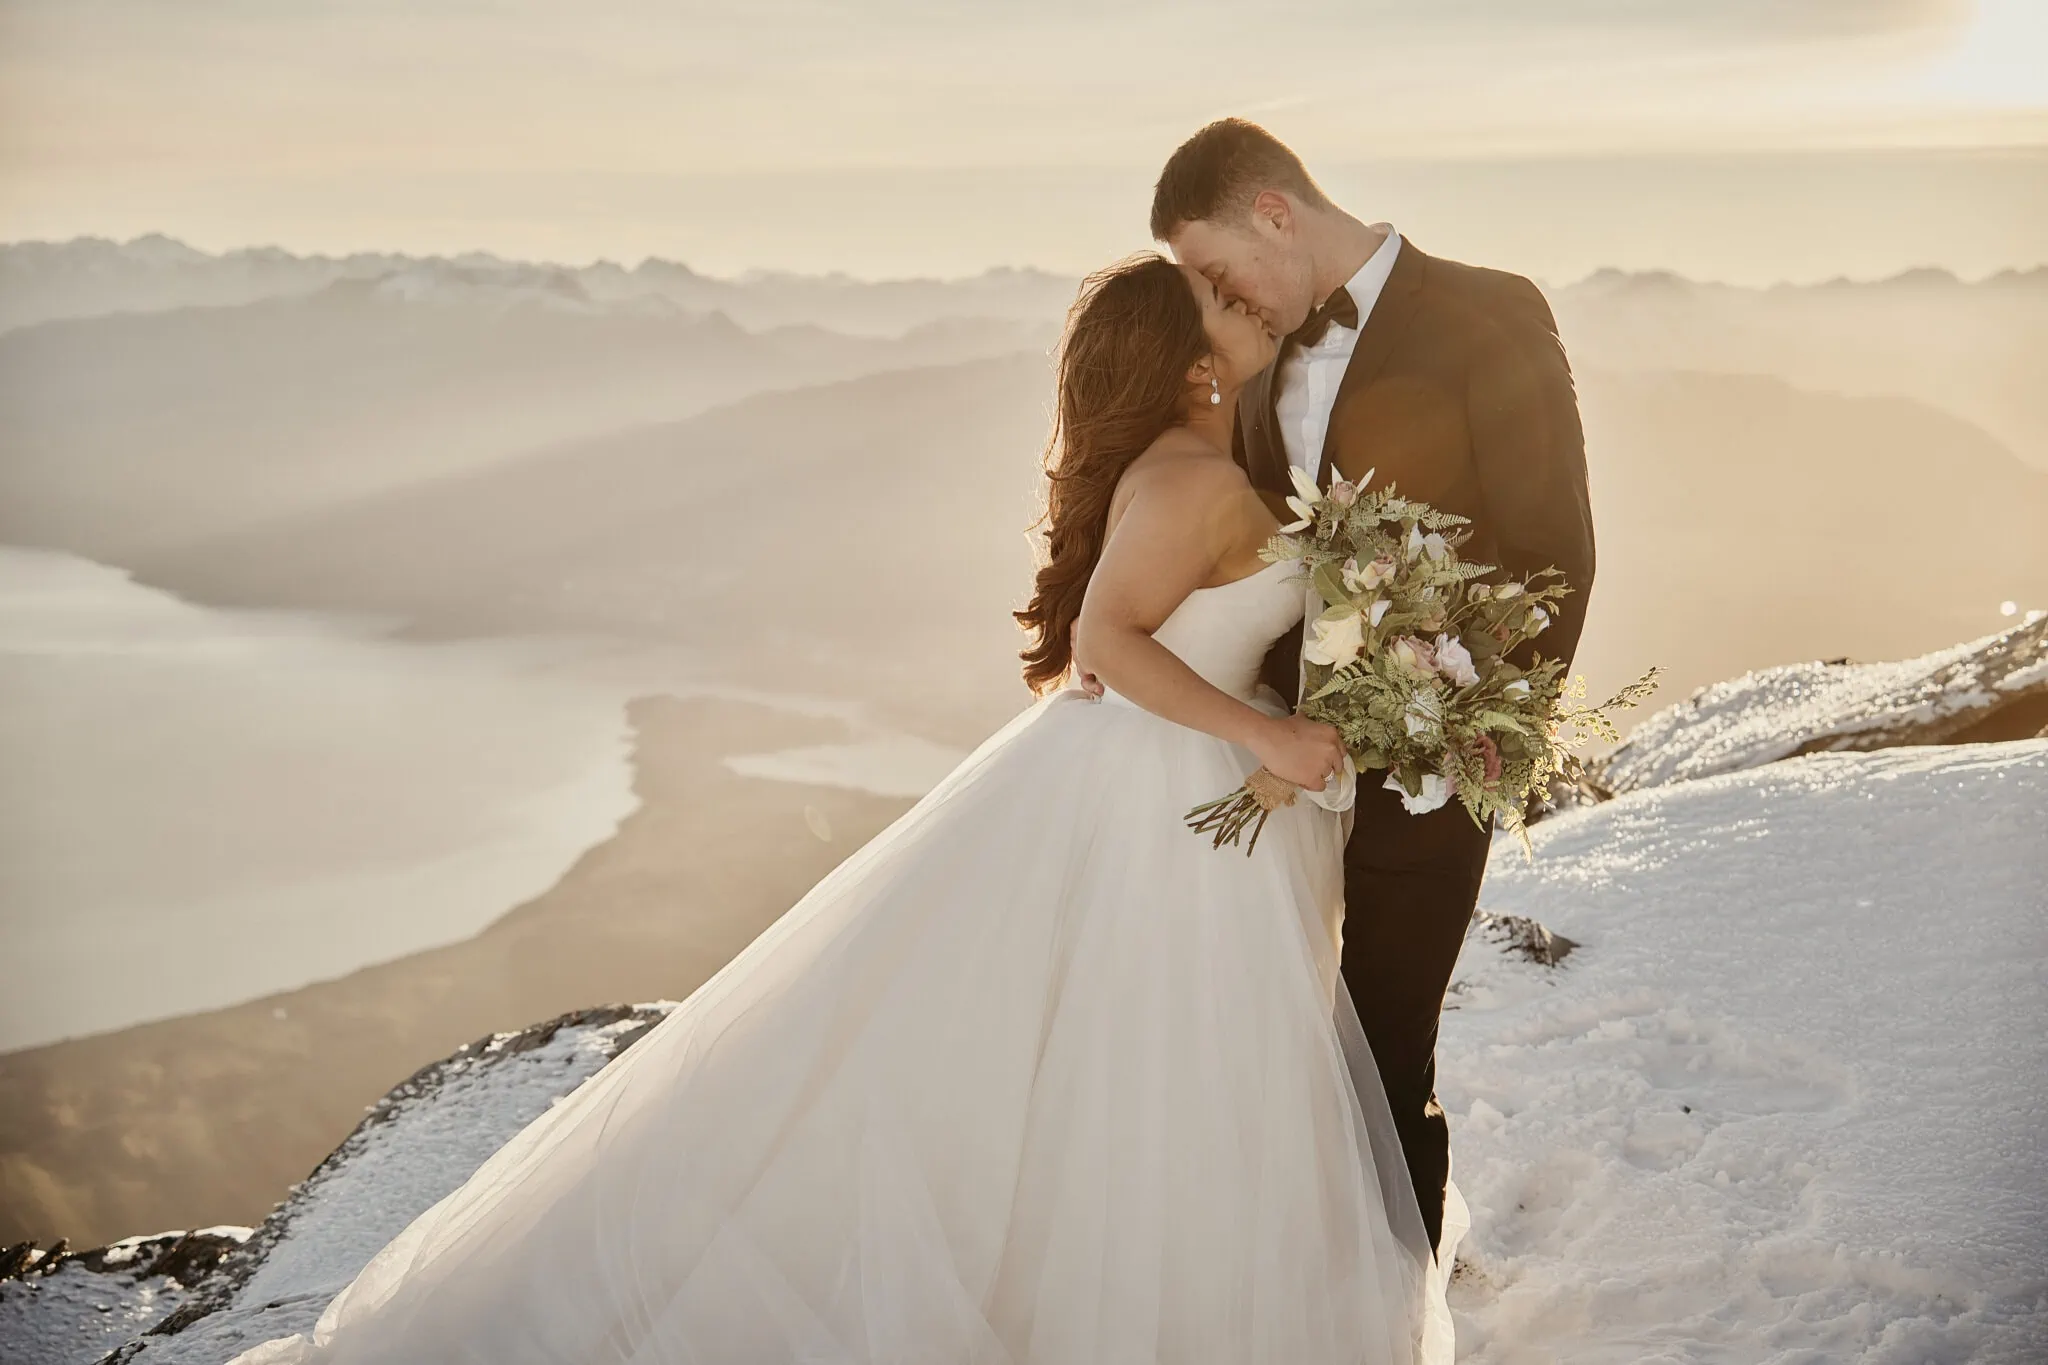 Queenstown New Zealand Elopement Wedding Photographer - Amy and Callum's romantic Queenstown Heli Pre Wedding Shoot captures a snowy mountain kiss.